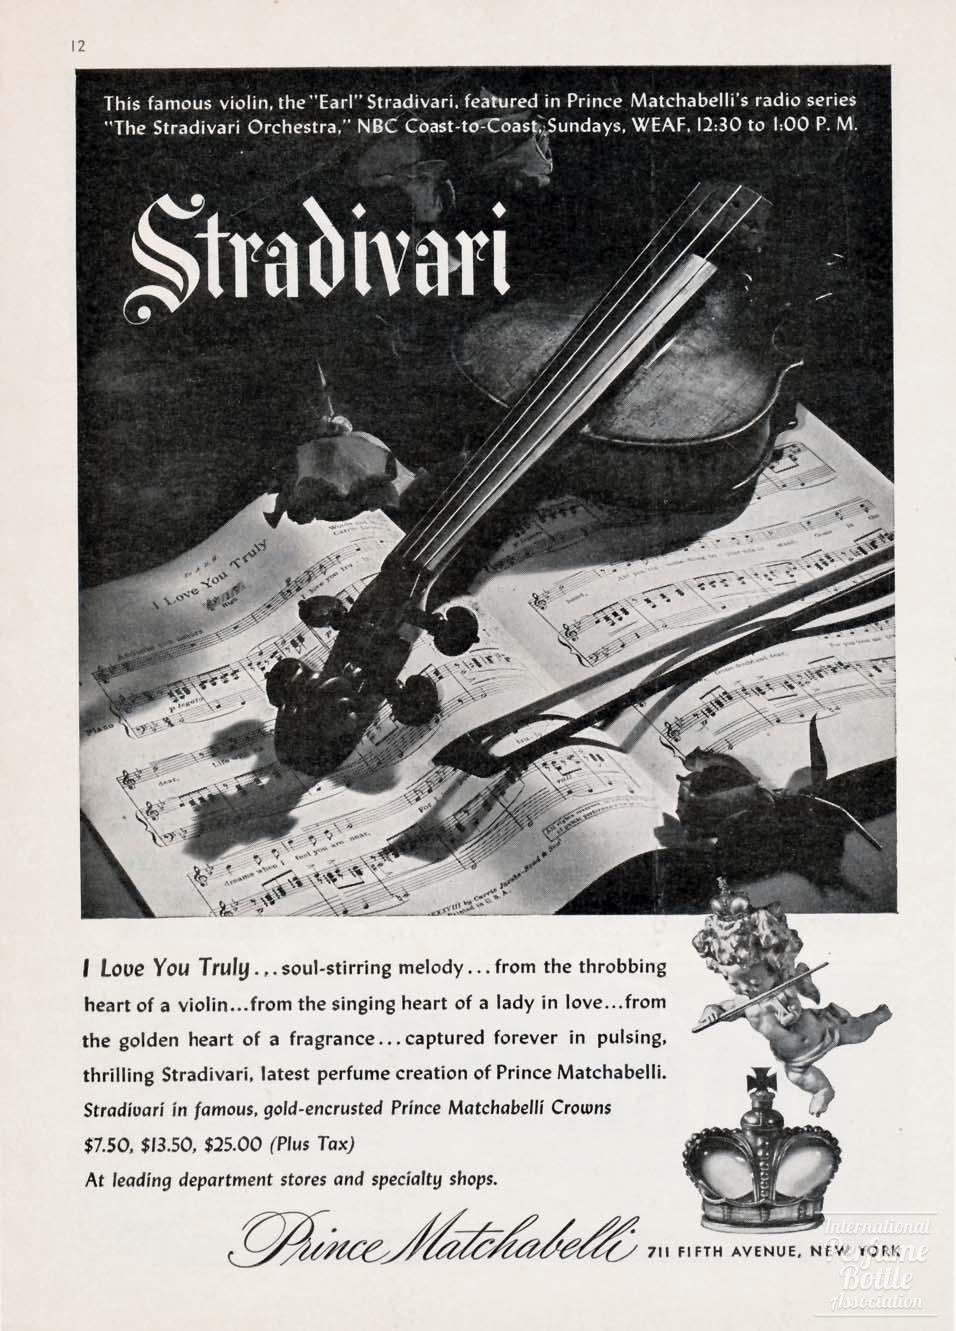 "Stradivari" by Prince Matchabelli Advertisement - 1944